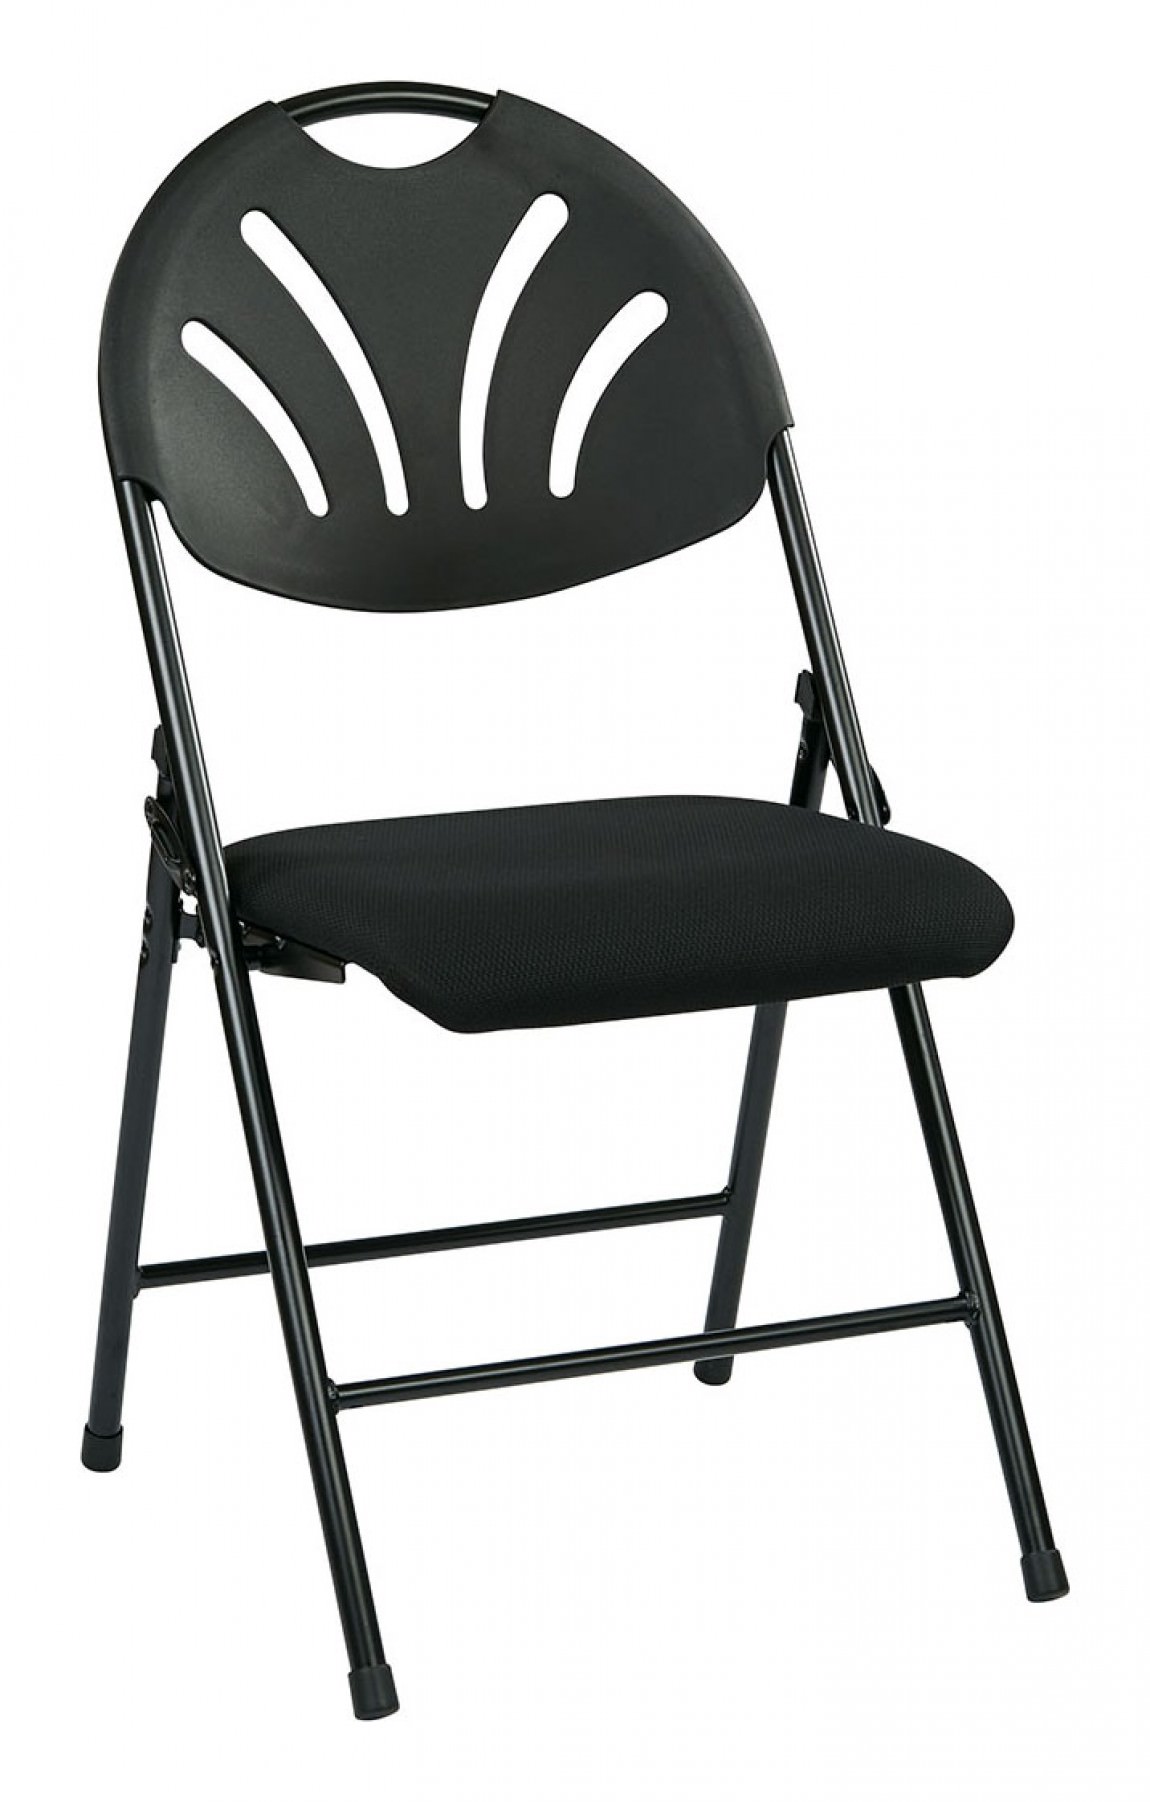 https://madisonliquidators.com/images/p/1150/24890-folding-cushion-chair-4-pack-1.jpg